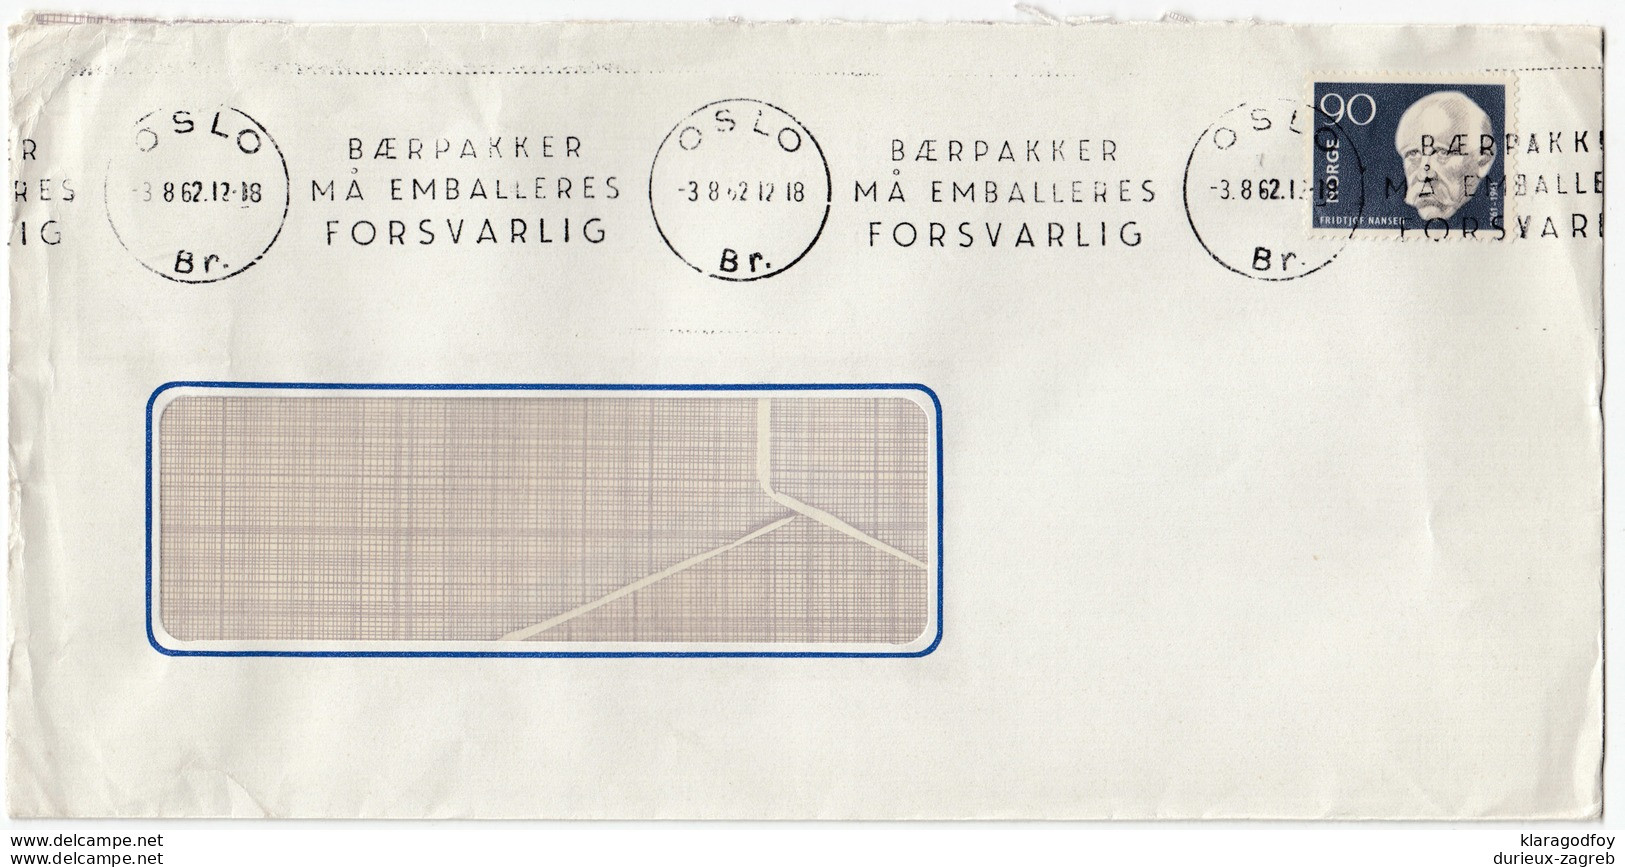 Baerpakker Ma Emalleres Forsvarlig Slogan Postmark On Letter Cover Travelled 1962  Bb161210 - Briefe U. Dokumente